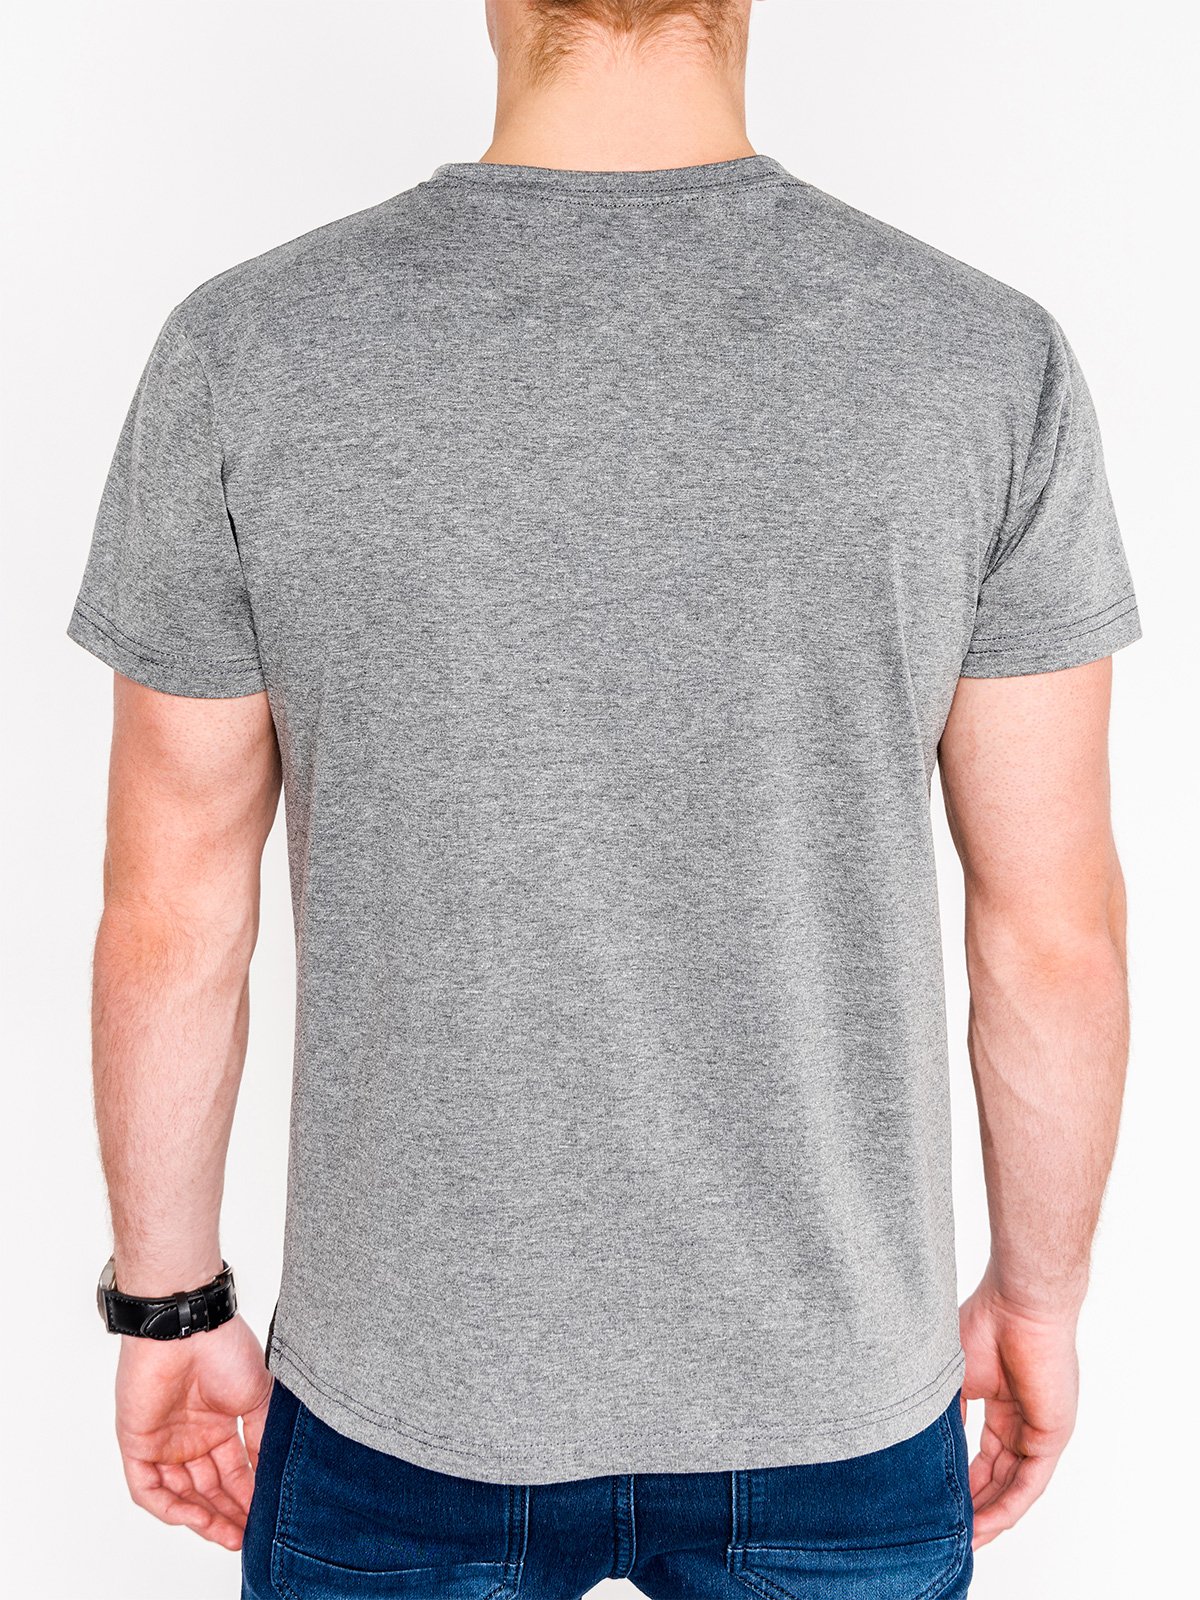 Men's printed t-shirt S1071 - dark grey | MODONE wholesale - Clothing ...